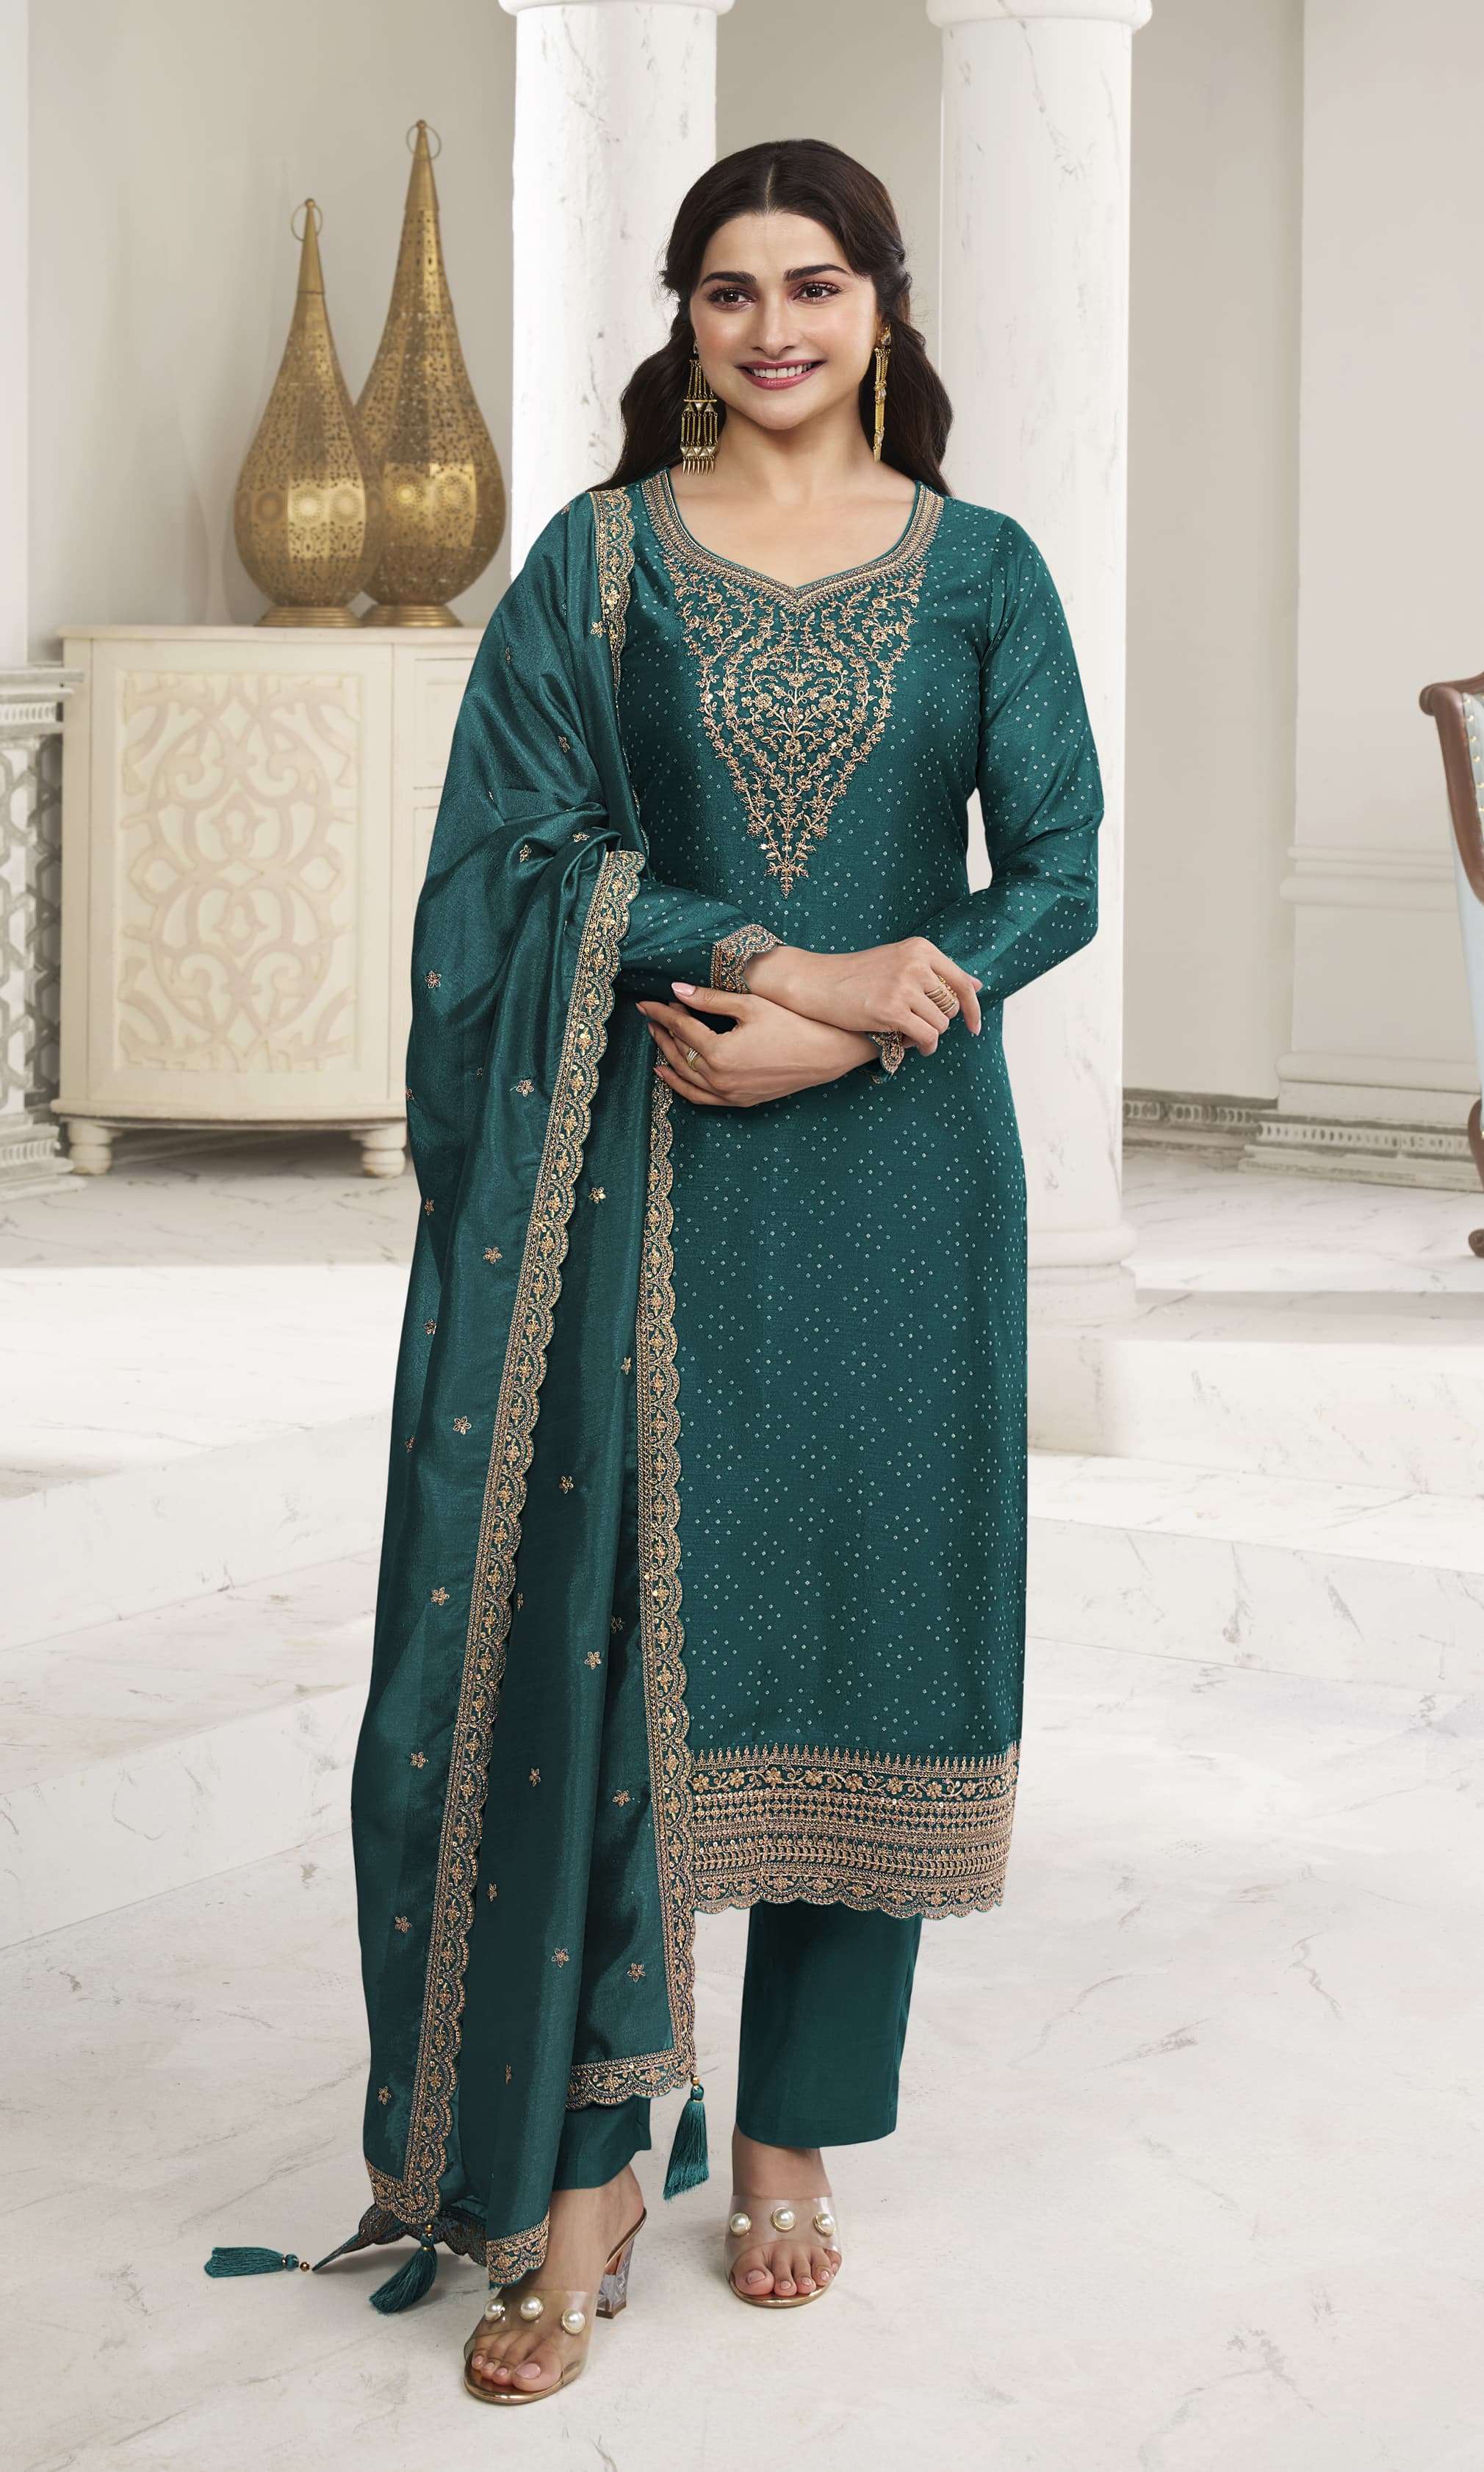 Surbhi Kuleesh Buy Vinay Fashion Wholesale online Lowest Price Georgette Salwar Suit Set